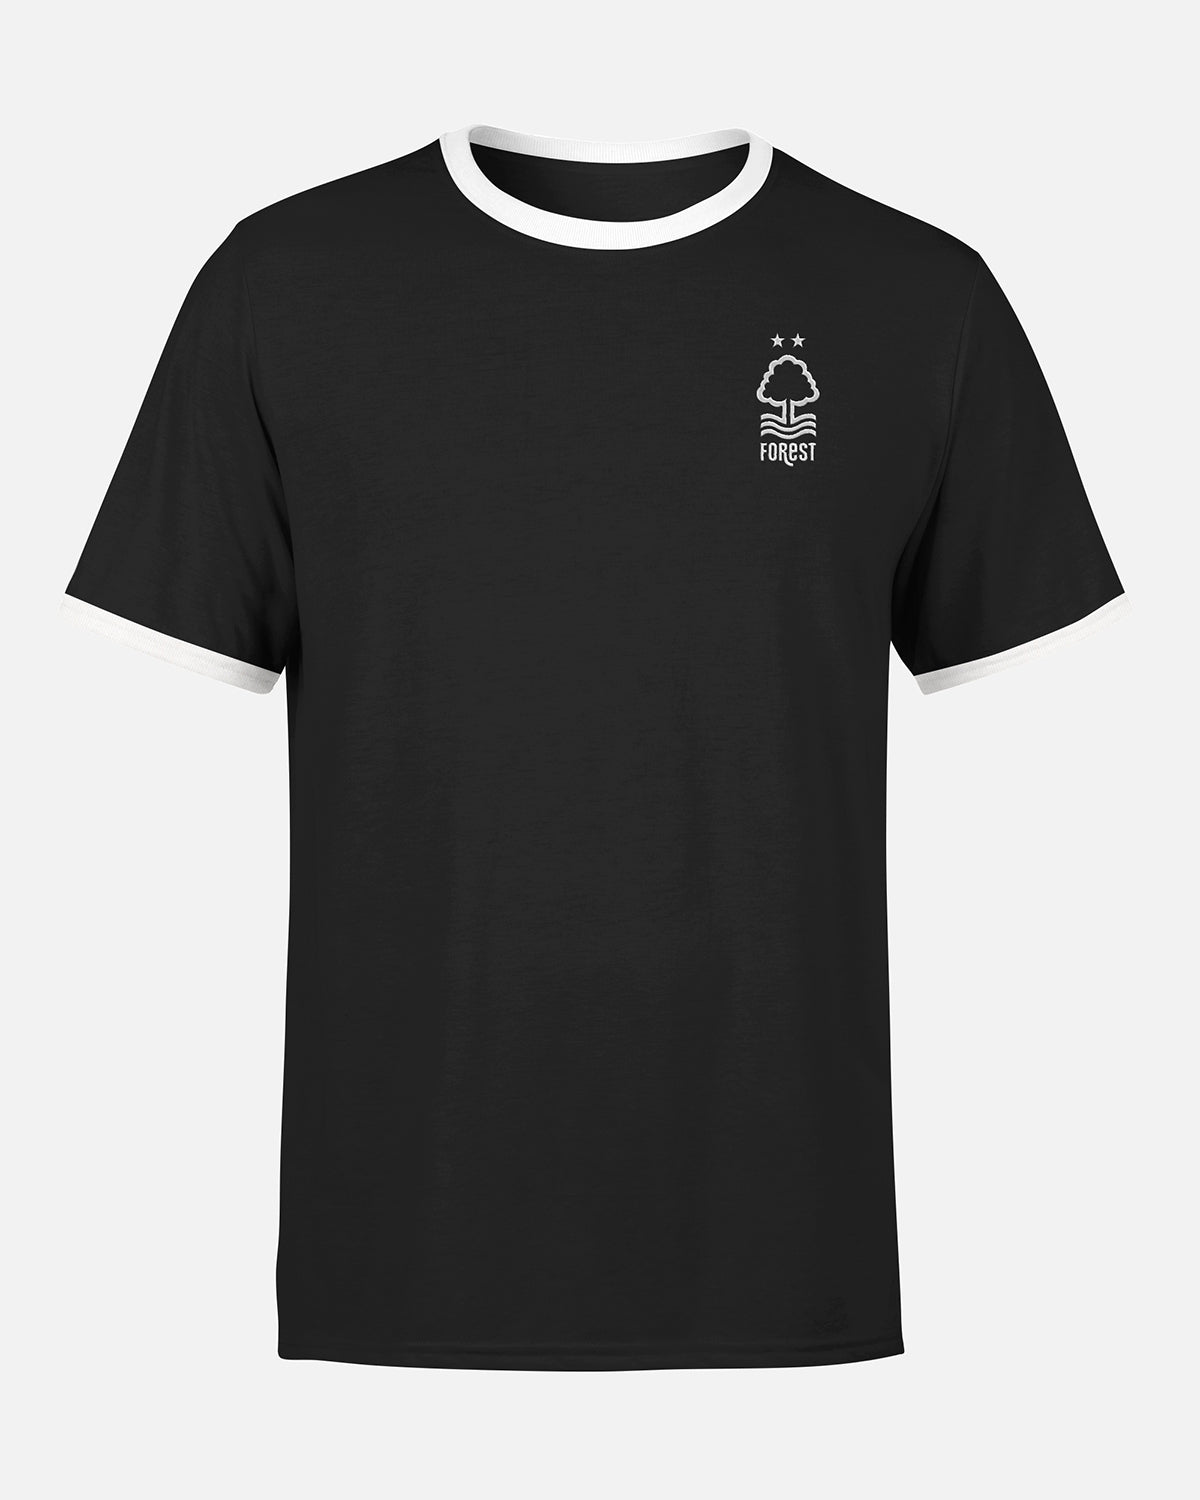 NFFC Adults Black Ringer T-Shirt - Nottingham Forest FC